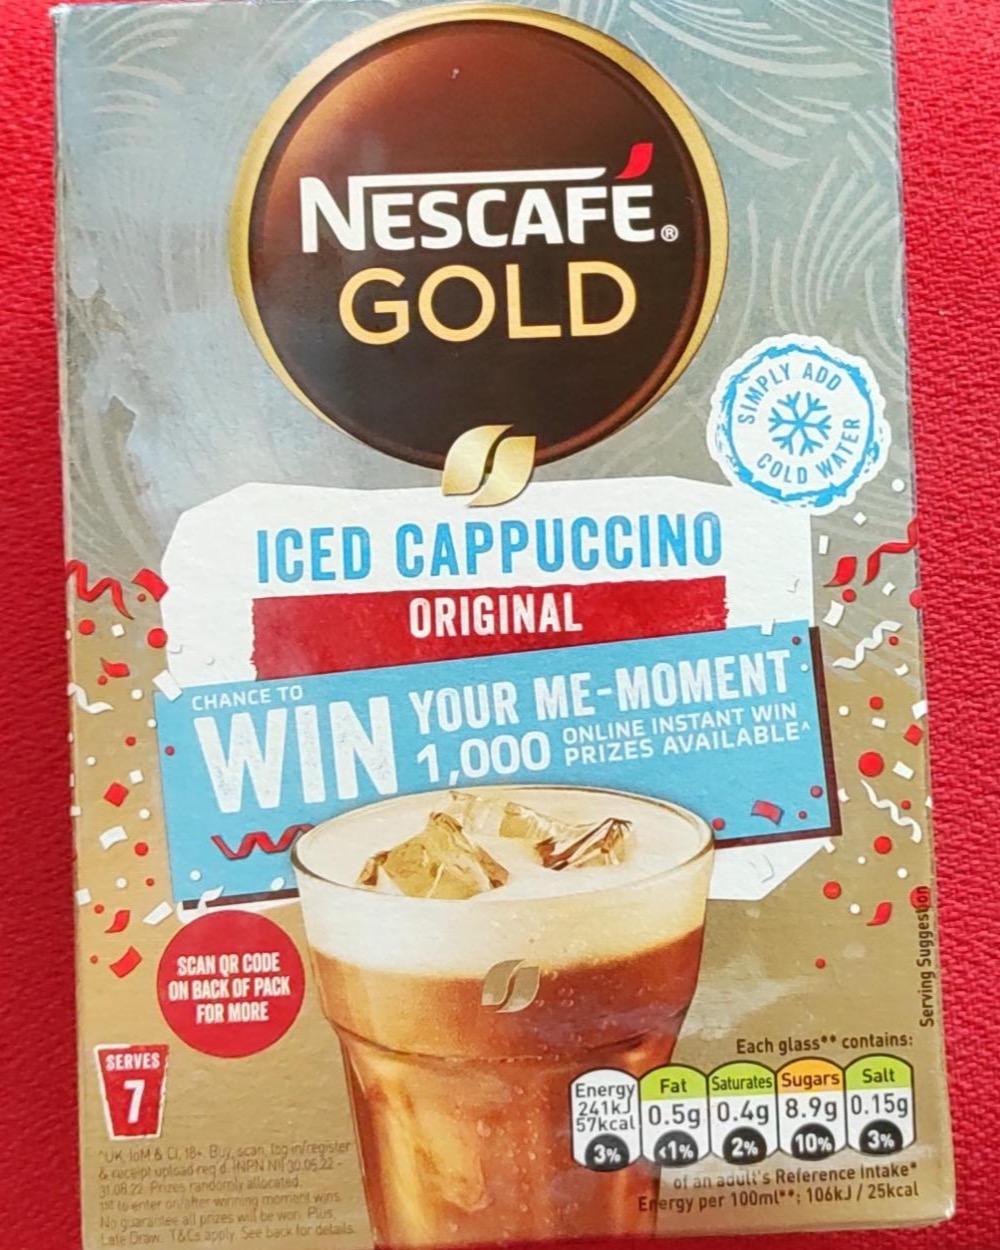 Képek - Iced Cappuccino original Nescafé Gold